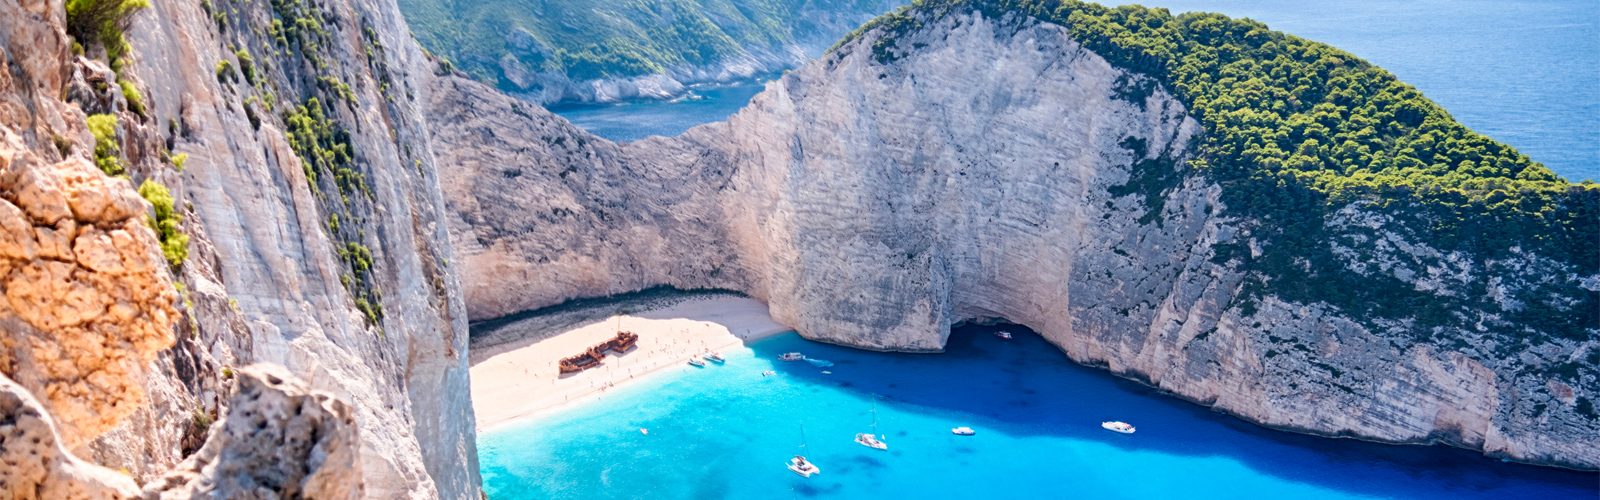 Luxury Greece Holidays Best Greek Islands To Visit In 2020 Header